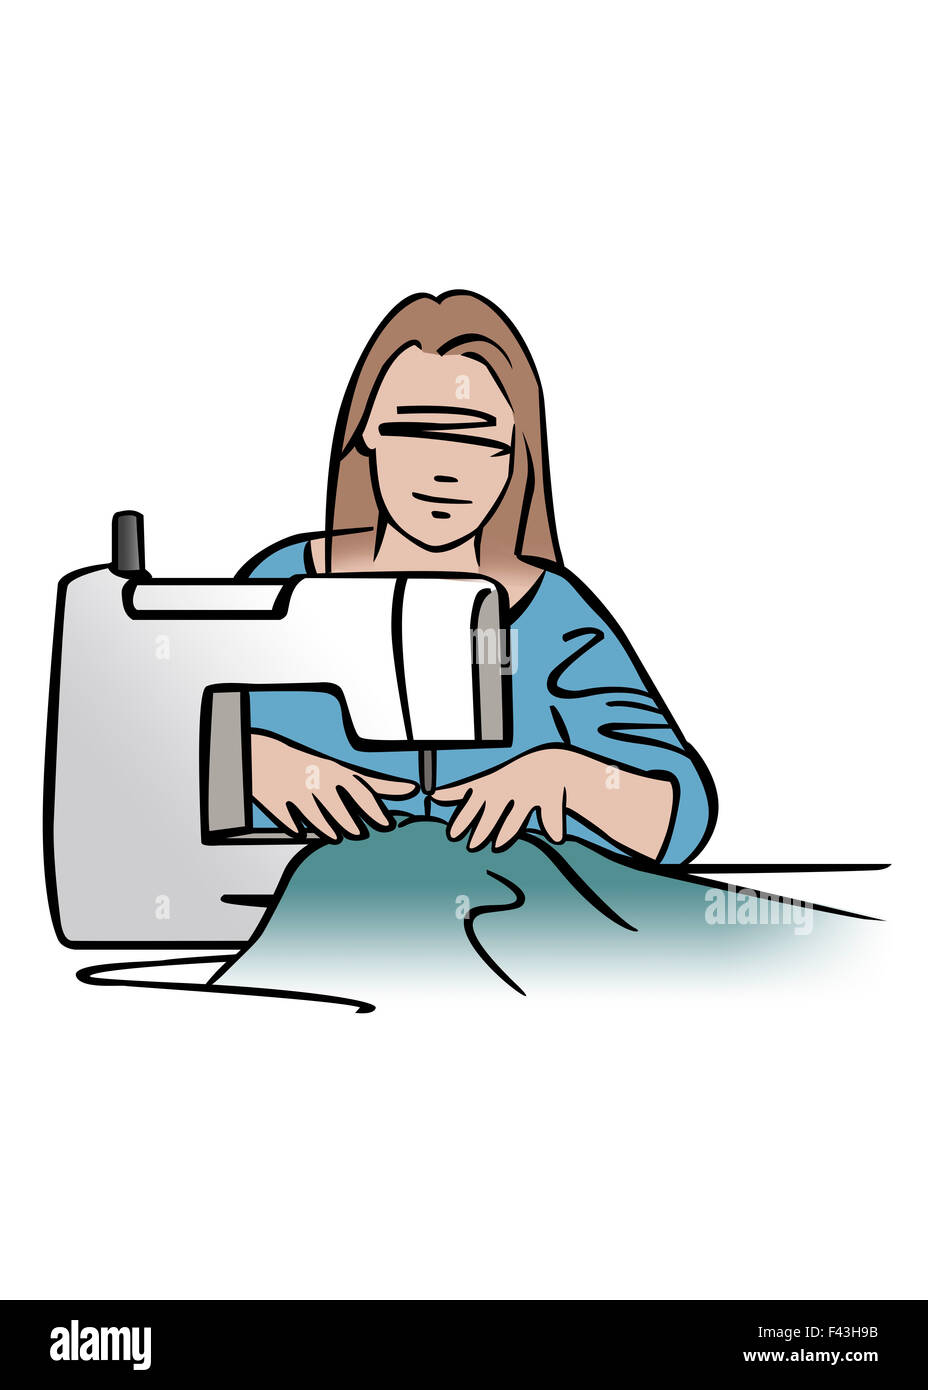 Illustration of woman using sewing machine Stock Photo